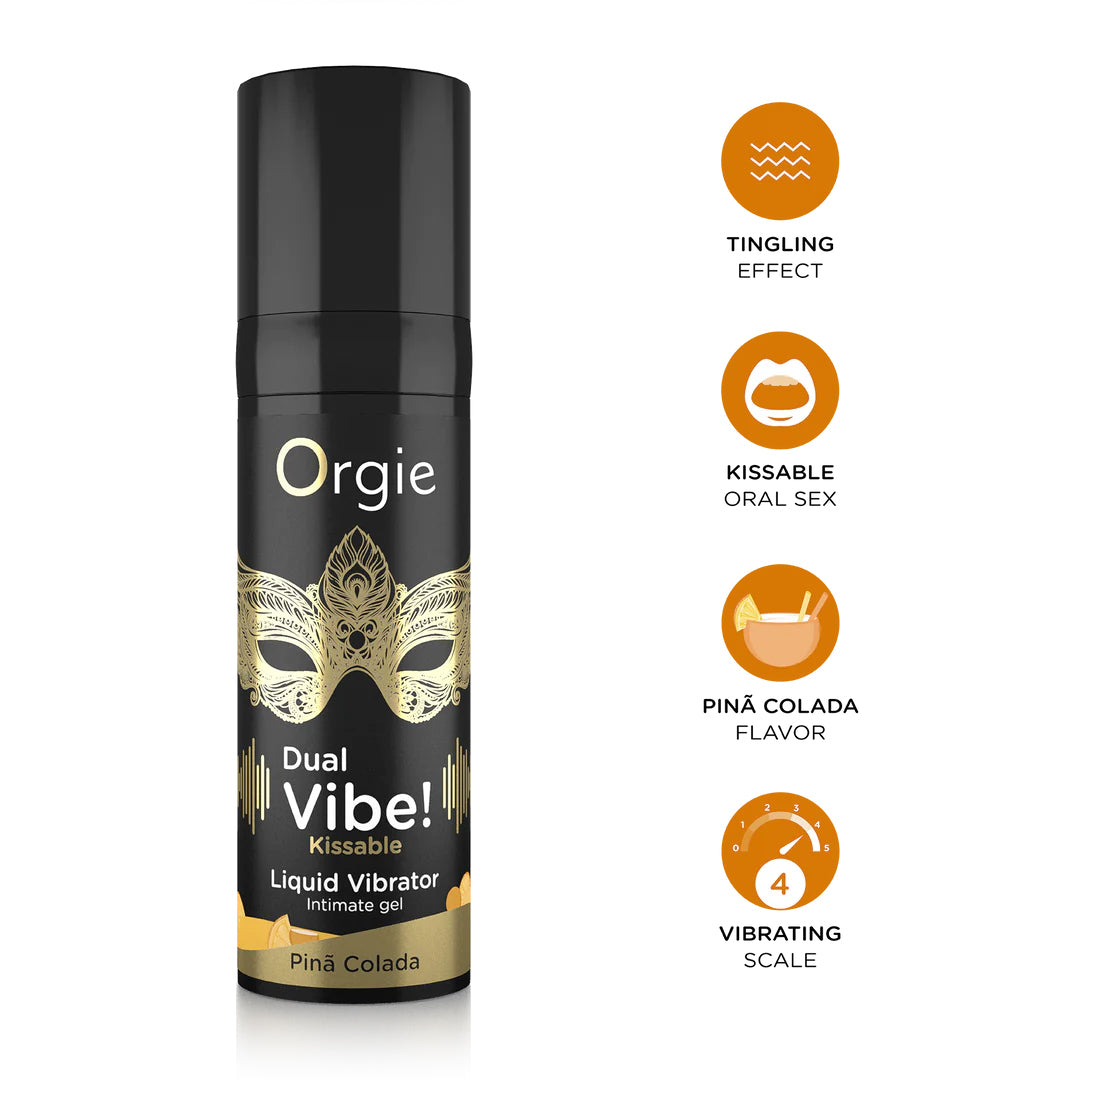 Orgie OR-17311 - Dual Vibe! Liquid Vibrator - Pina Colada - 0.5 fl oz / 15 ml